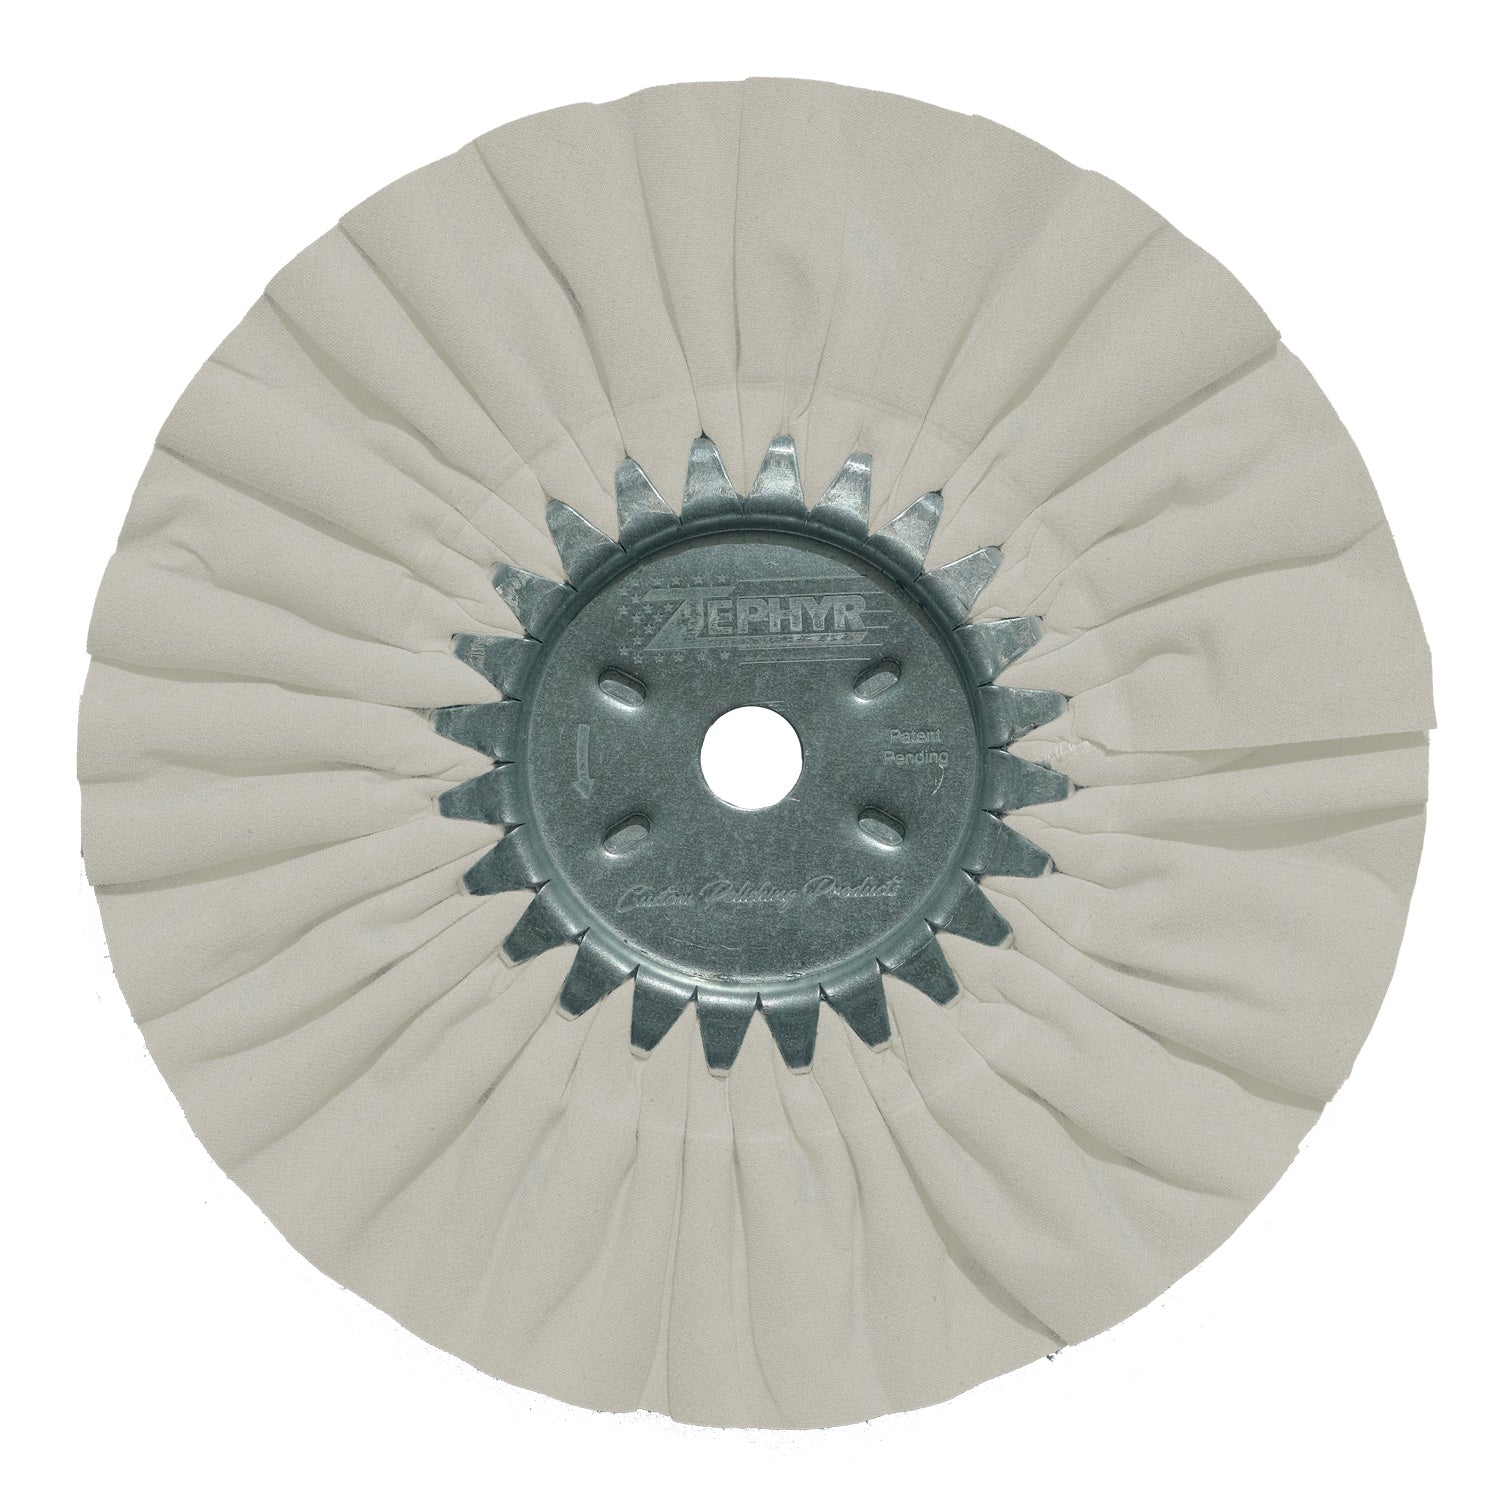 Zephyr (4 Piece) Wheel Polishing Kit